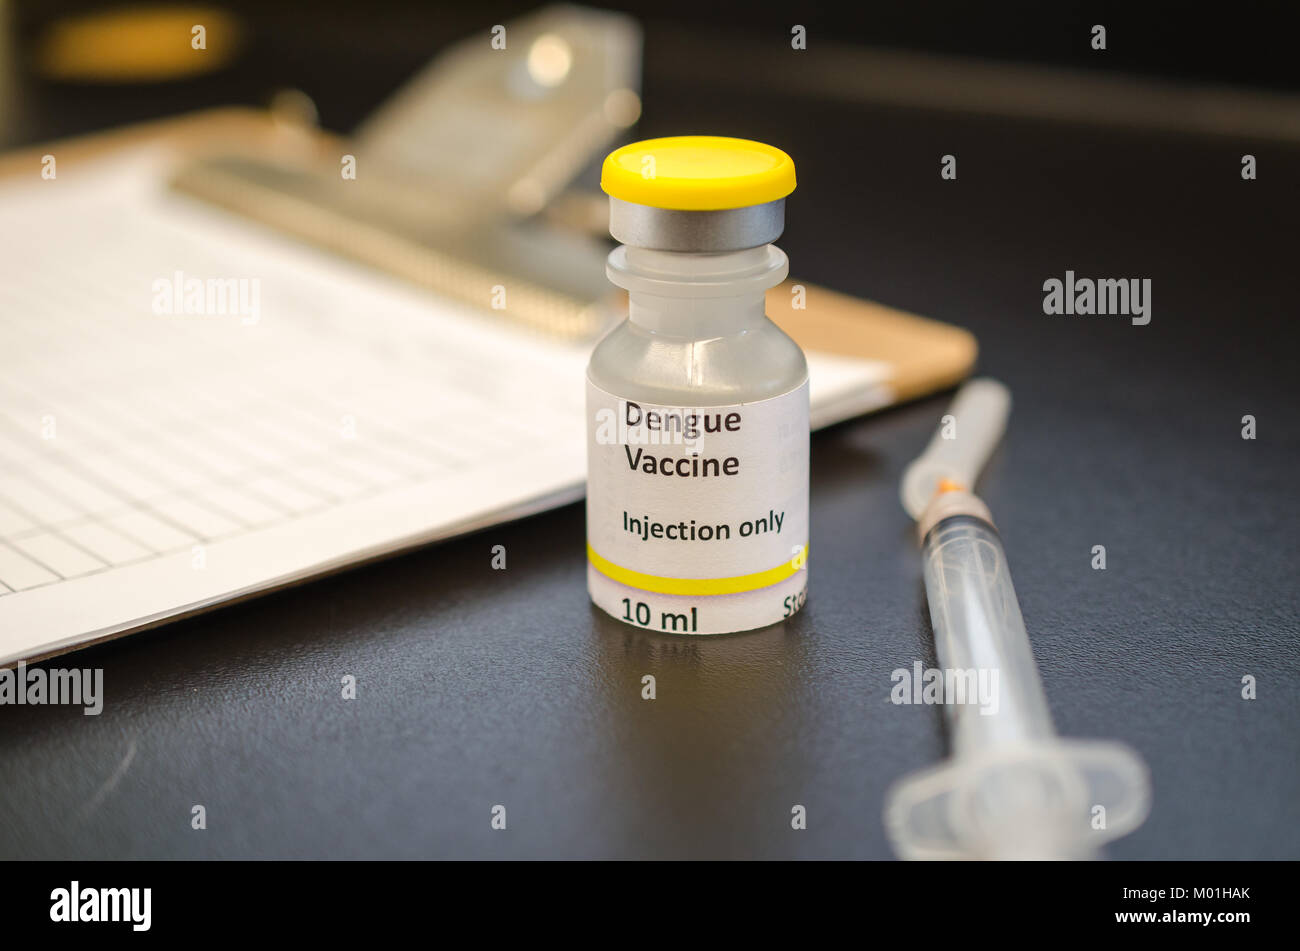 Dengue virus vaccine vial with syringe Stock Photo